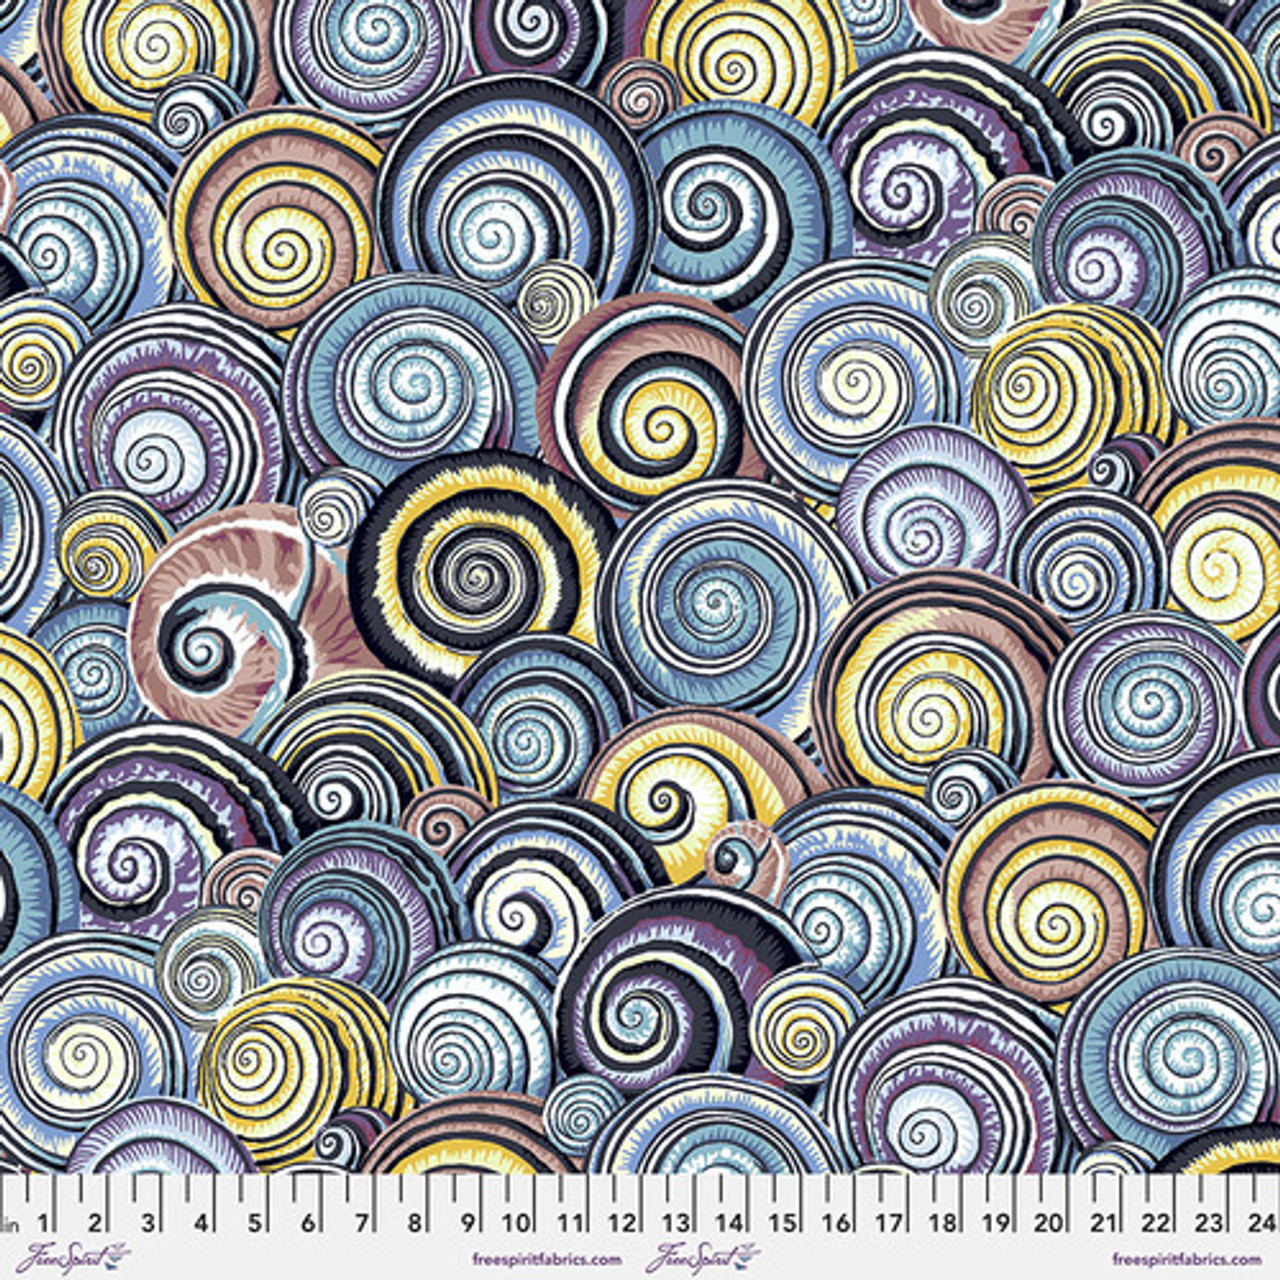 Spiral Shells - Contrast, Philip Jacobs, PWPJ073, per 1/2 yard - Hyggeligt  Fabrics